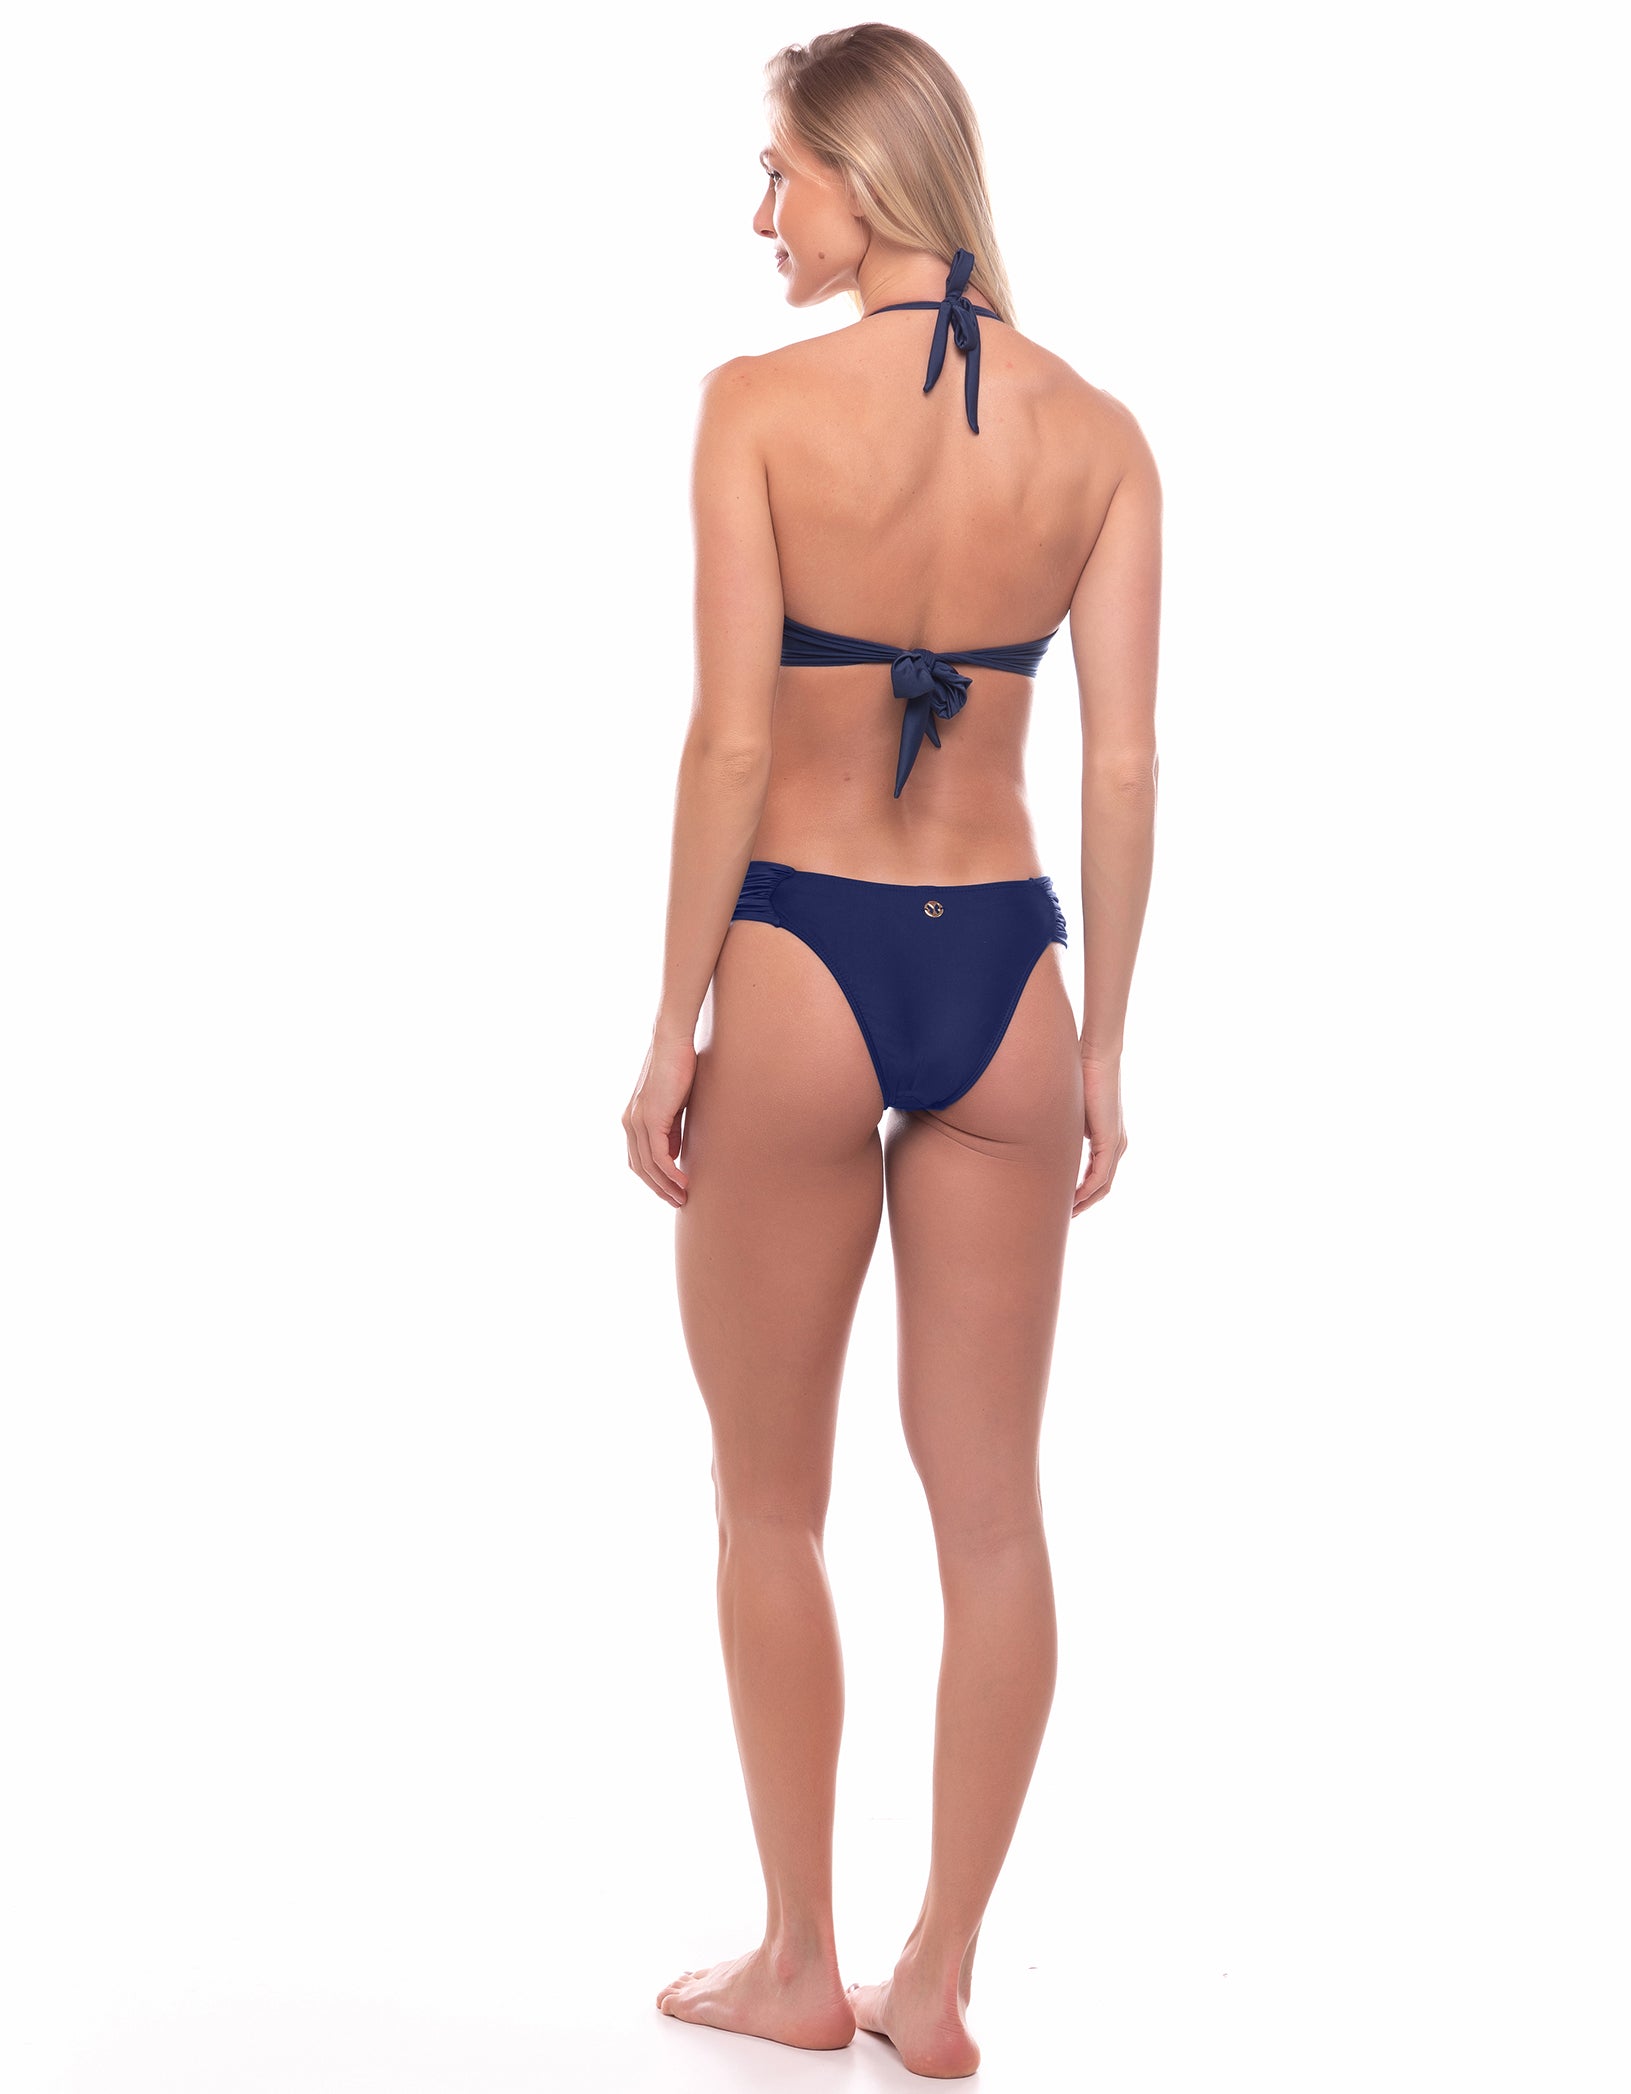 Vestem - Navy Blue Comfort Bikini Bottom - TG135.C0028